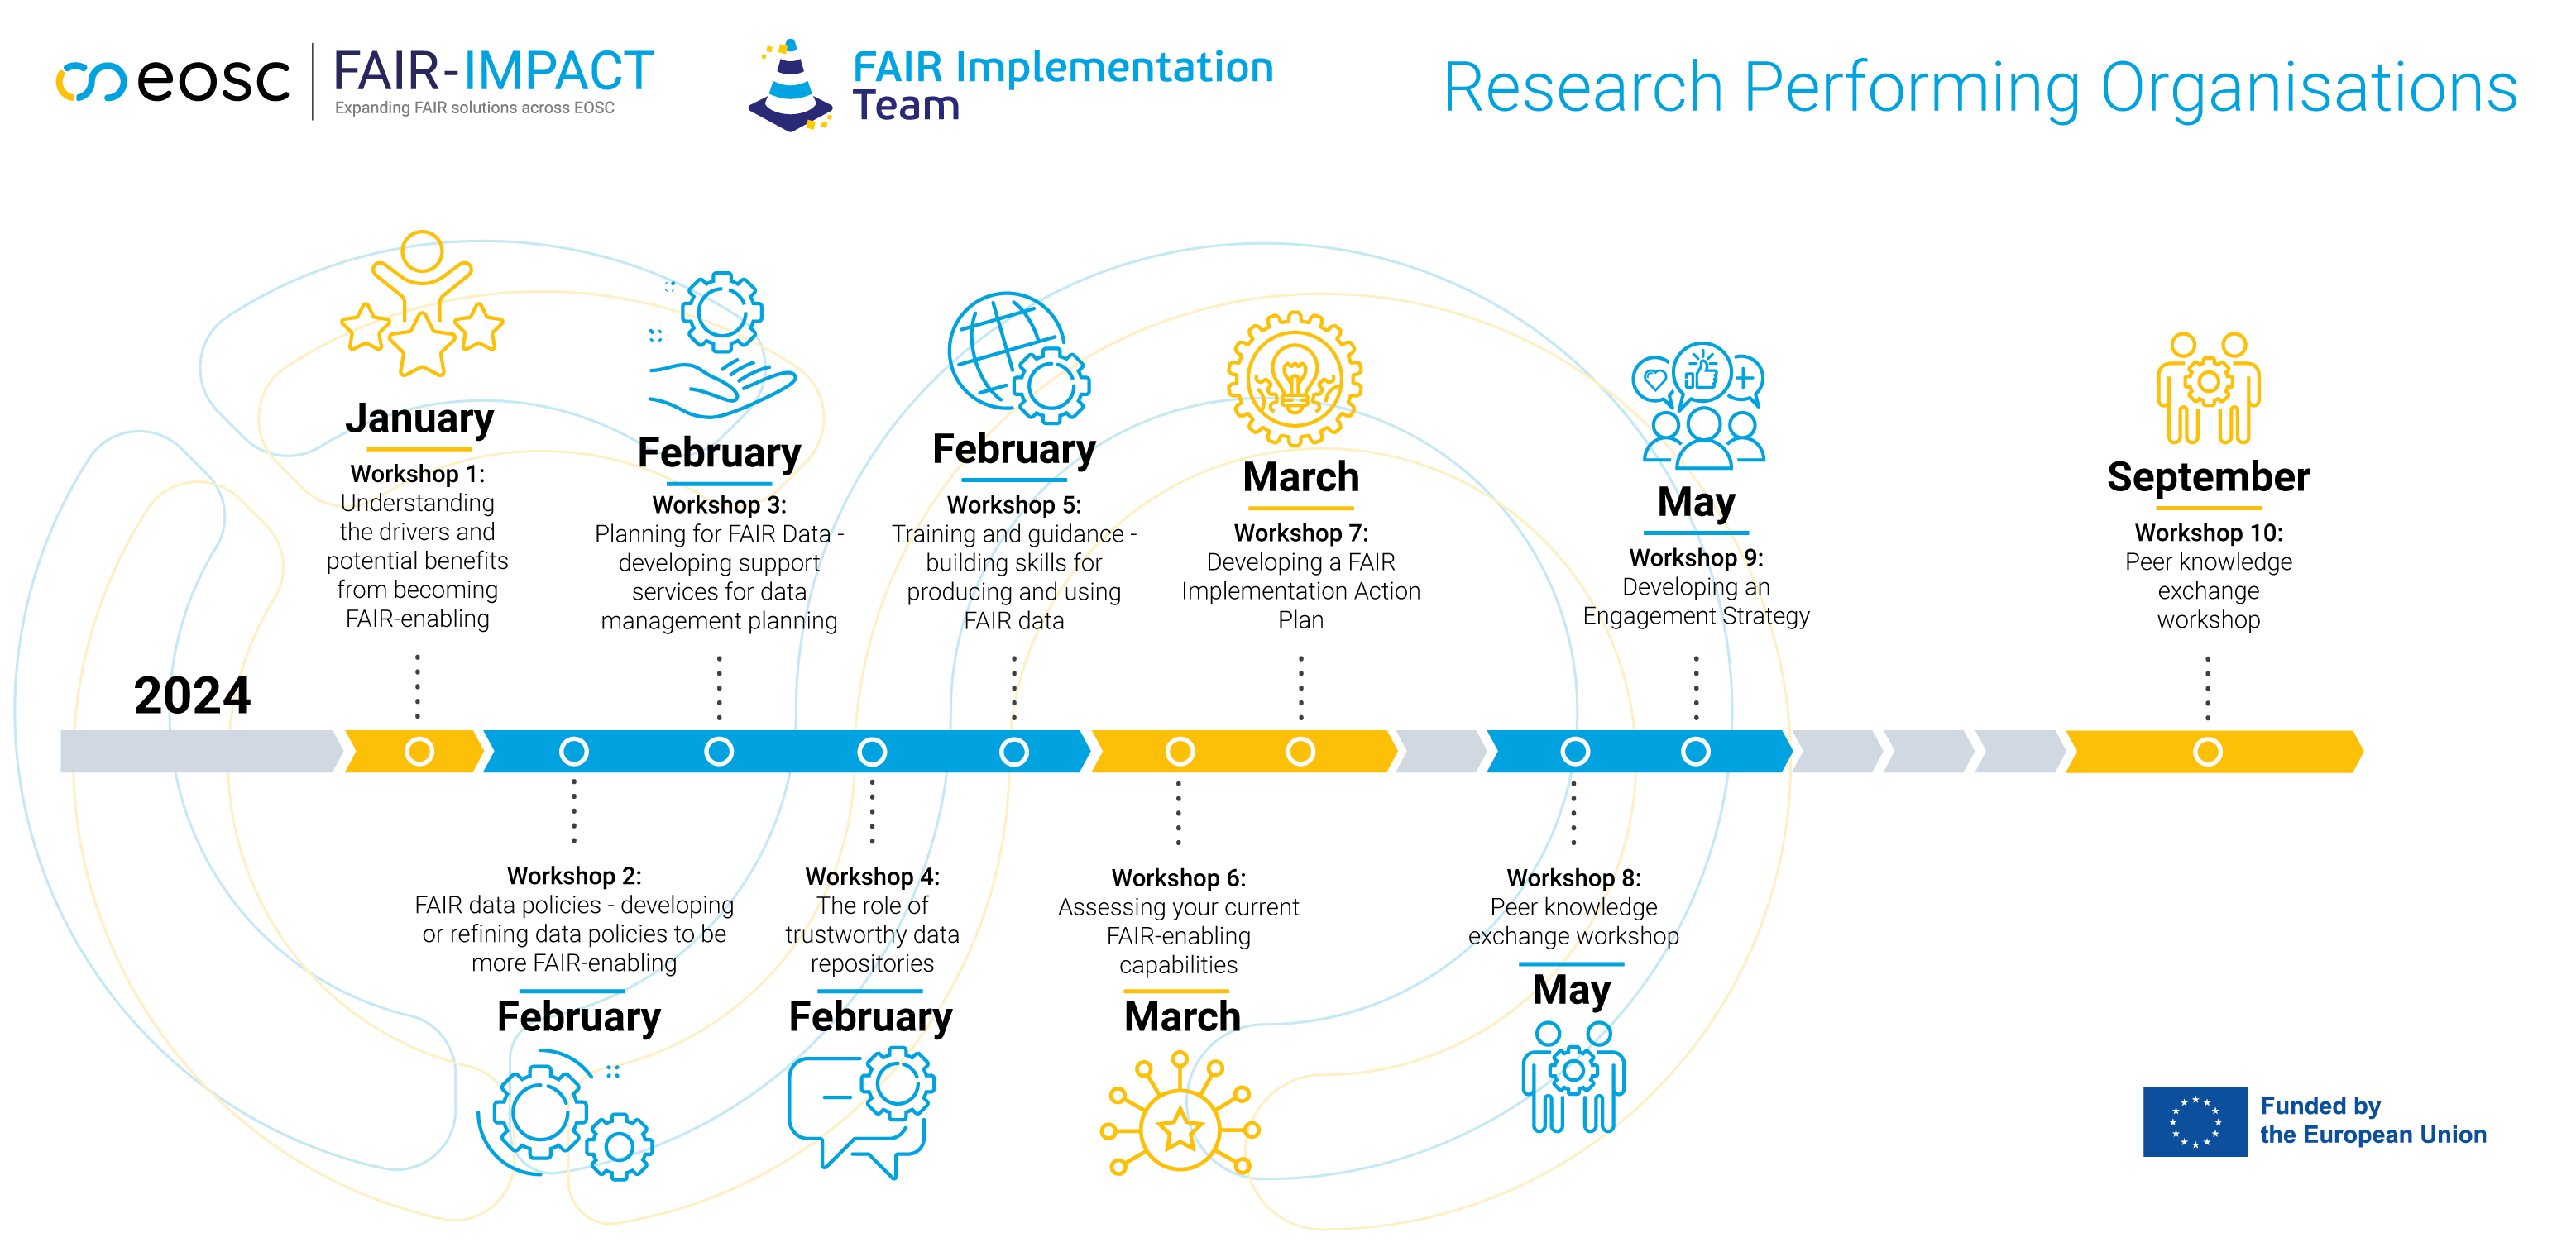 FAIR IMPACT research performing organisatiosn